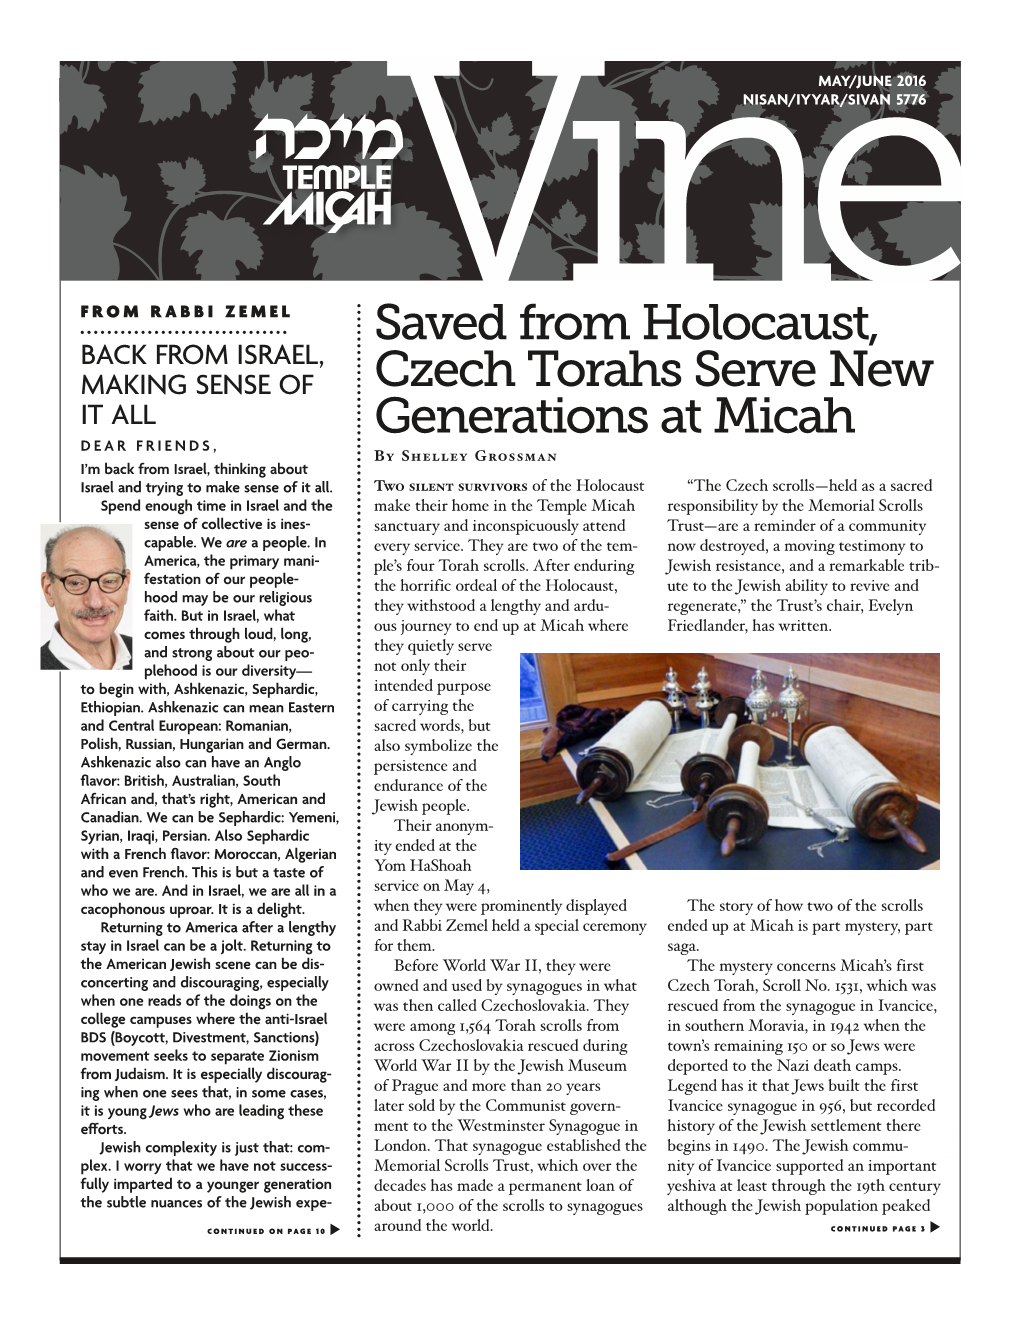 Saved from Holocaust, Czech Torahs Serve New Generations at Micah